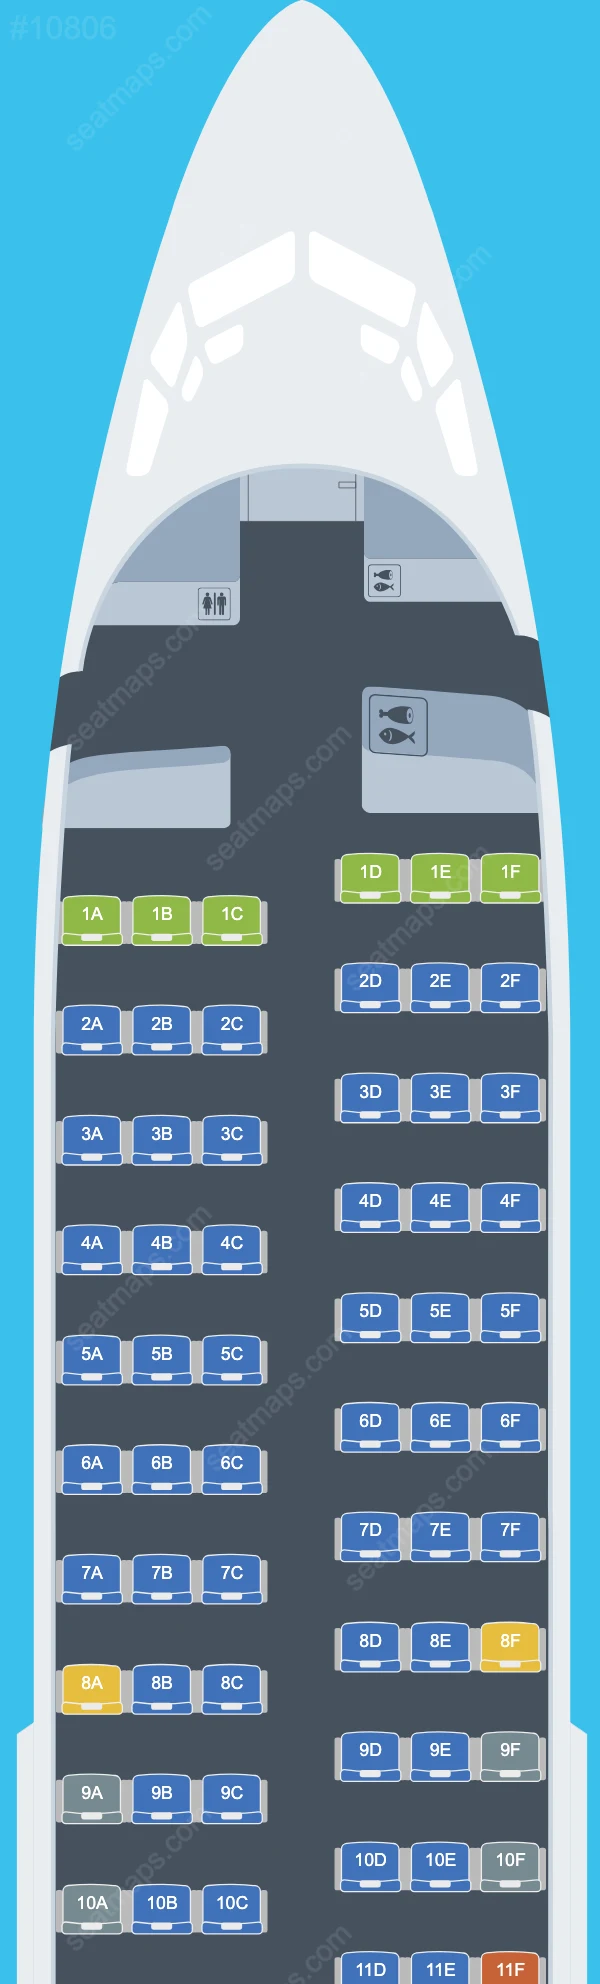 Lumiwings Boeing 737 Seat Maps 737-700